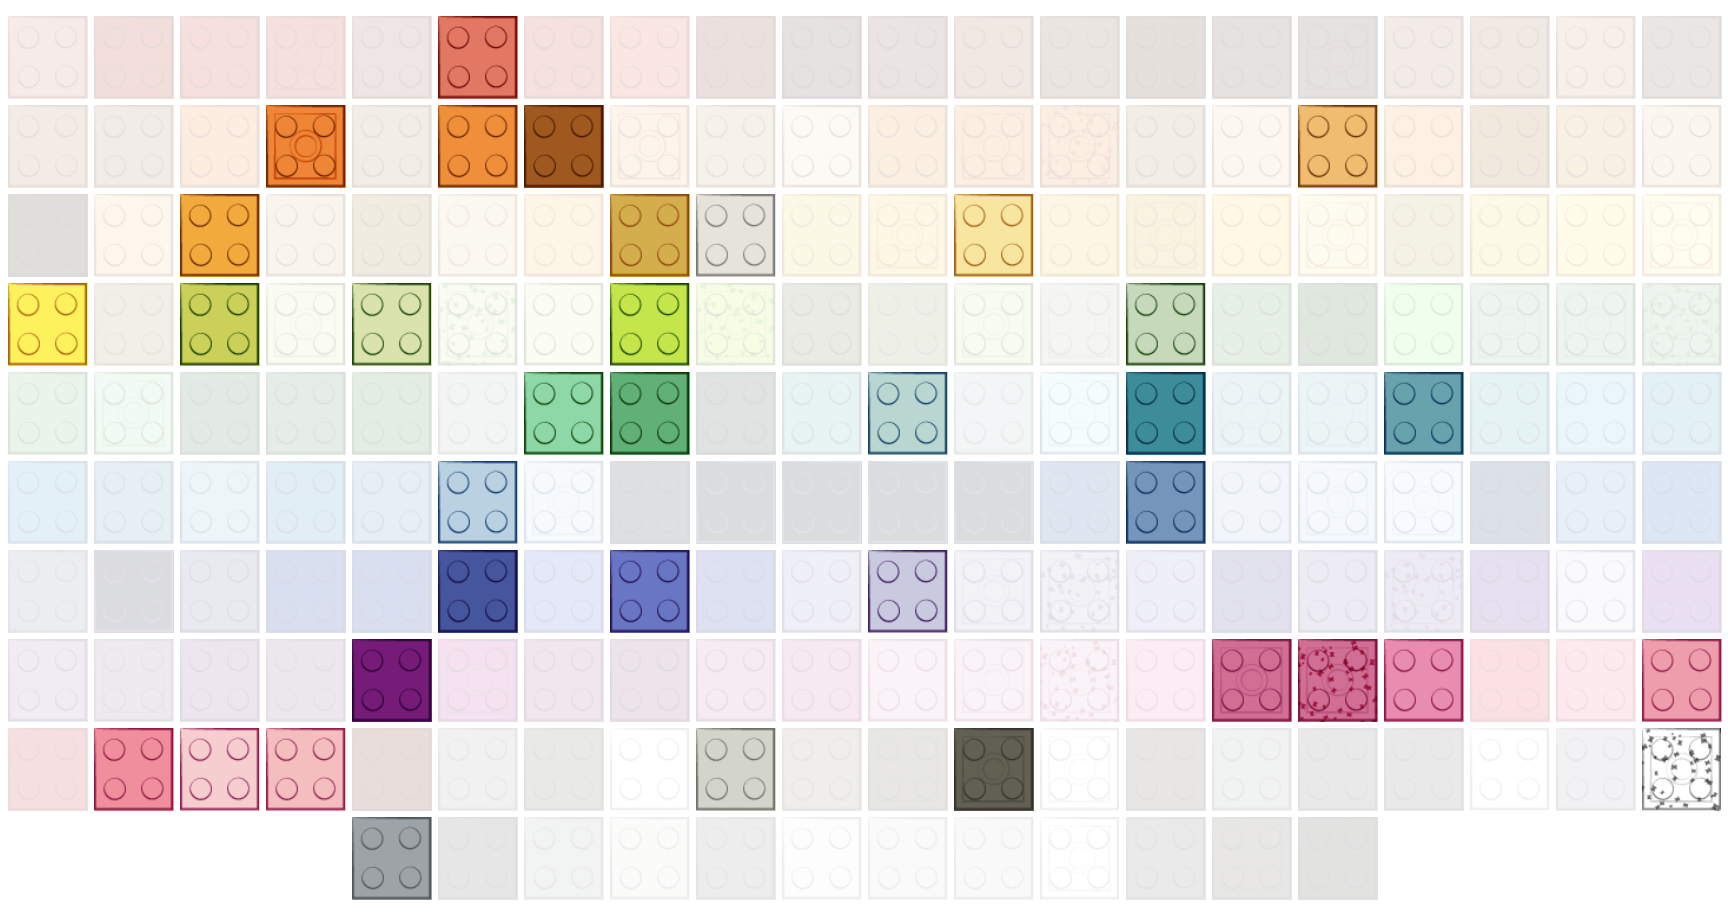 Evolution of Lego brick colors